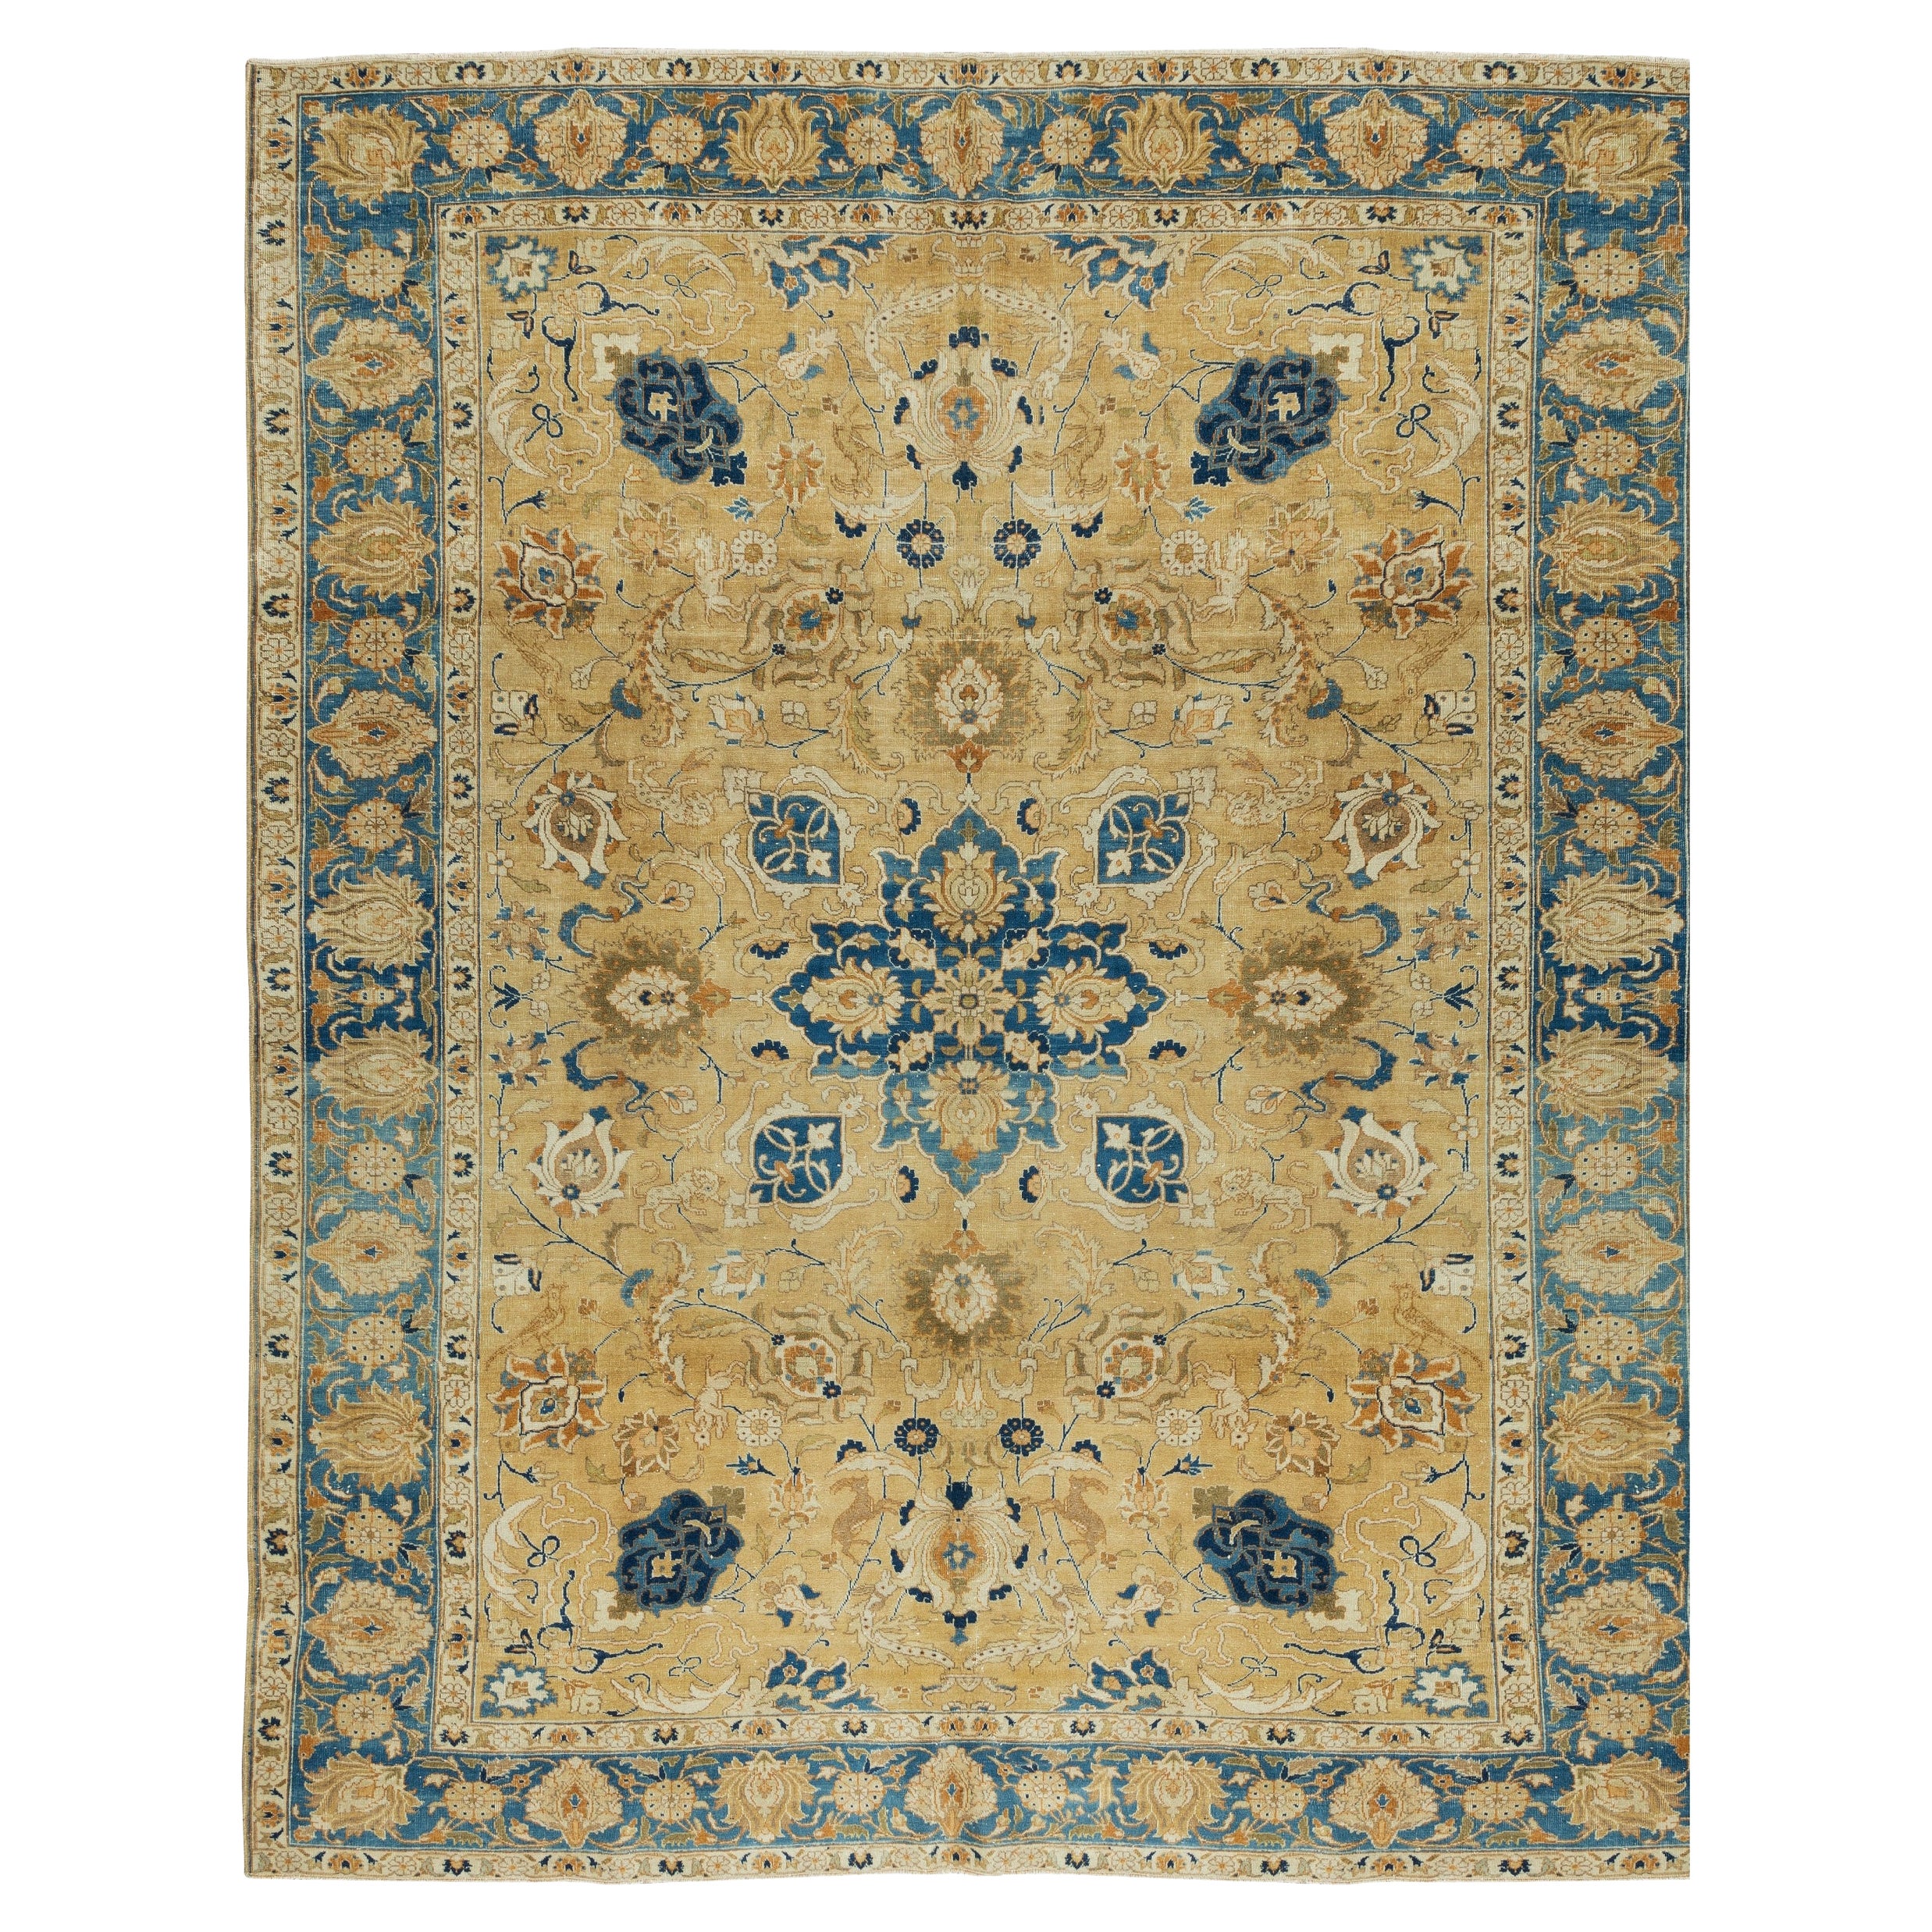 8x11 Ft Modern Handmade Area Rug in Beige & Blue, Floral Pattern Turkish Carpet For Sale